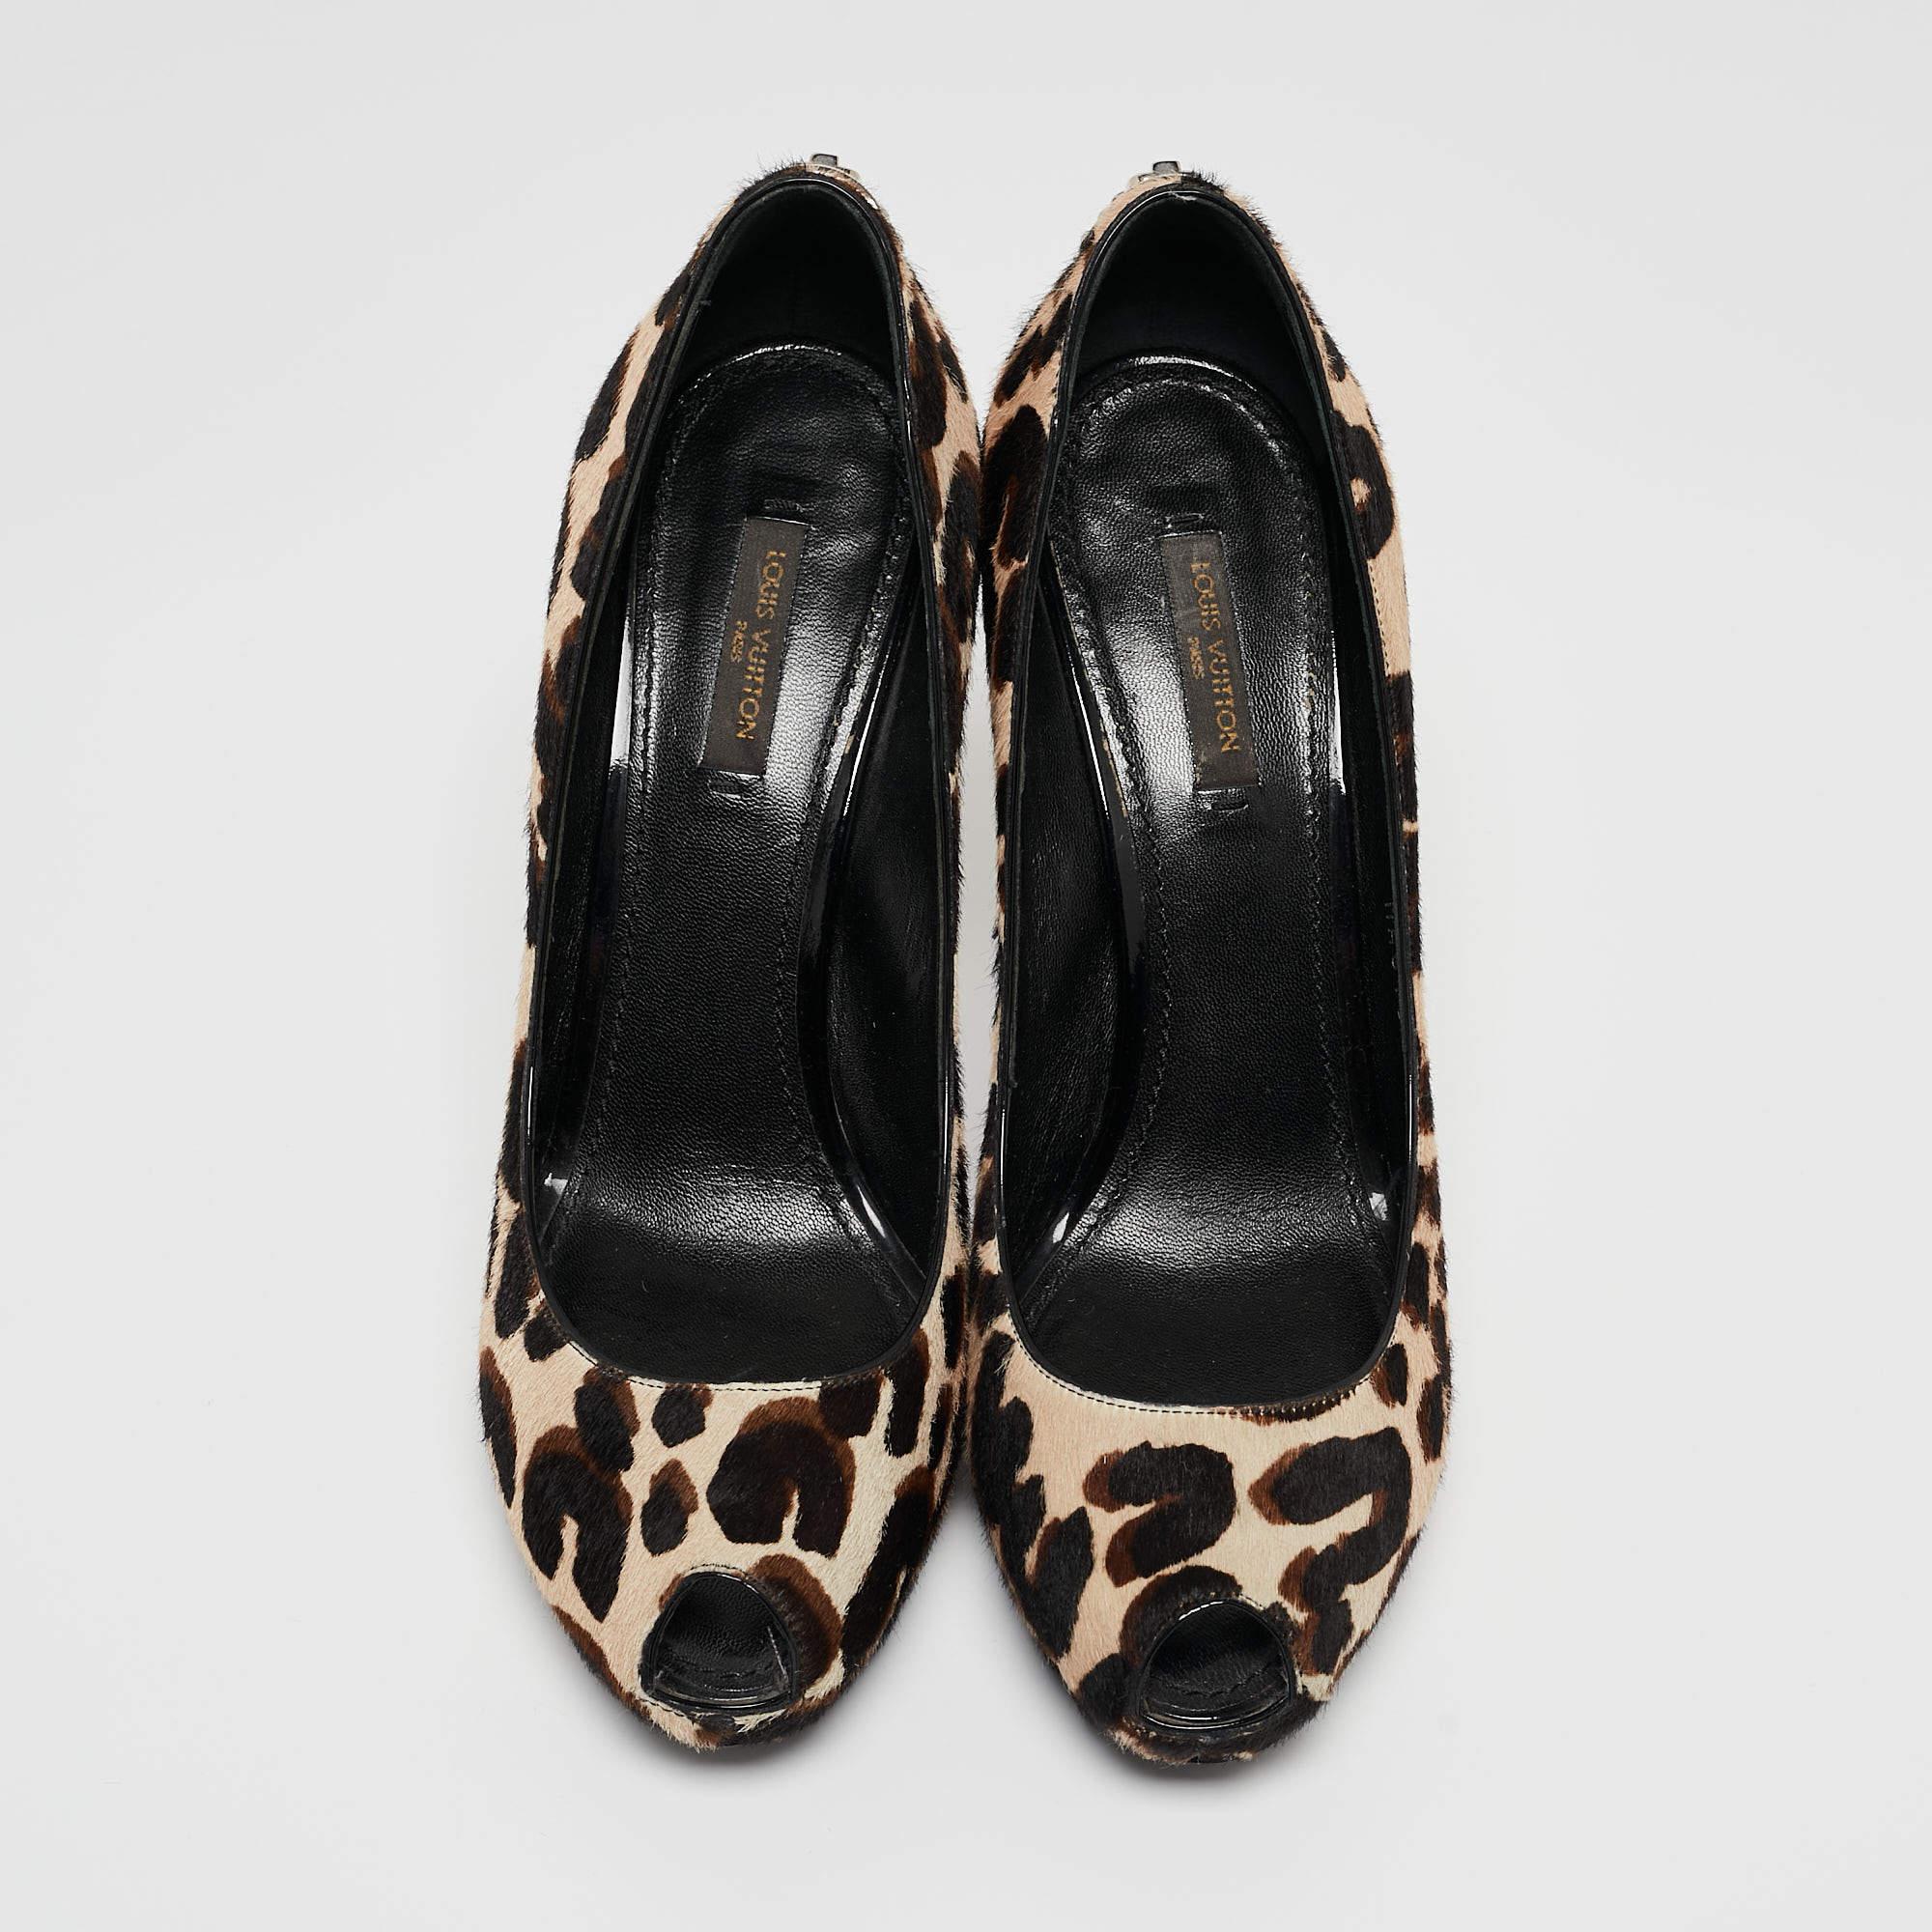 Louis Vuitton Tricolor Leopard Print Calf Hair Oh Really! Peep Toe Pumps Size 38 In Good Condition For Sale In Dubai, Al Qouz 2